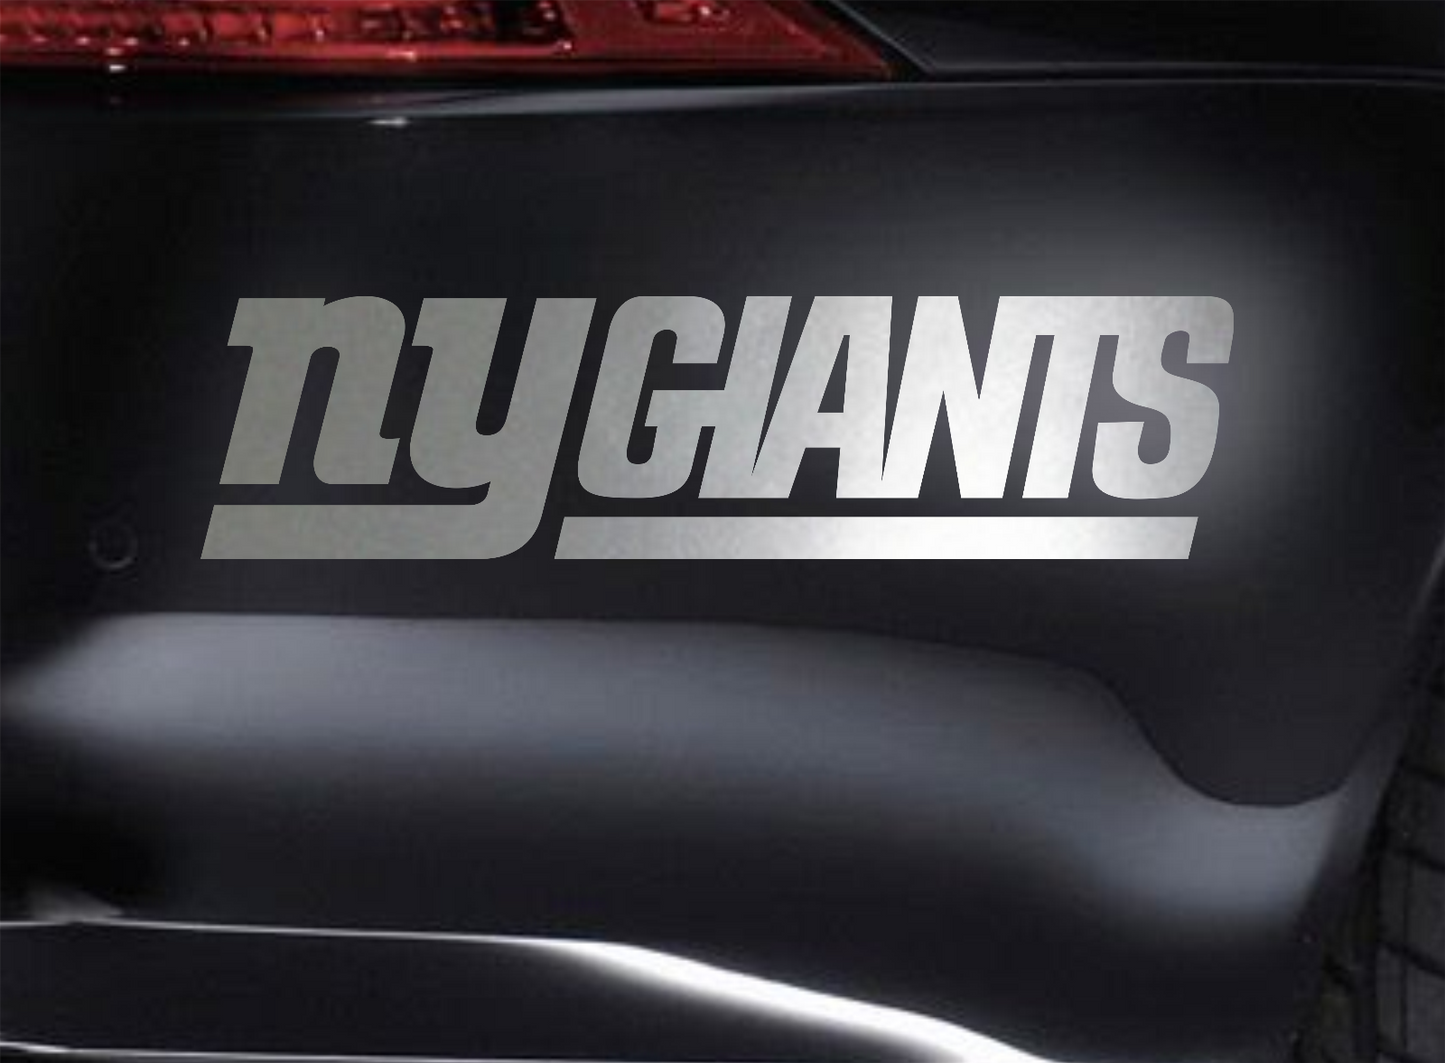 New York Giants Vinyl Decal Window Sticker Car Accessories Home Decor